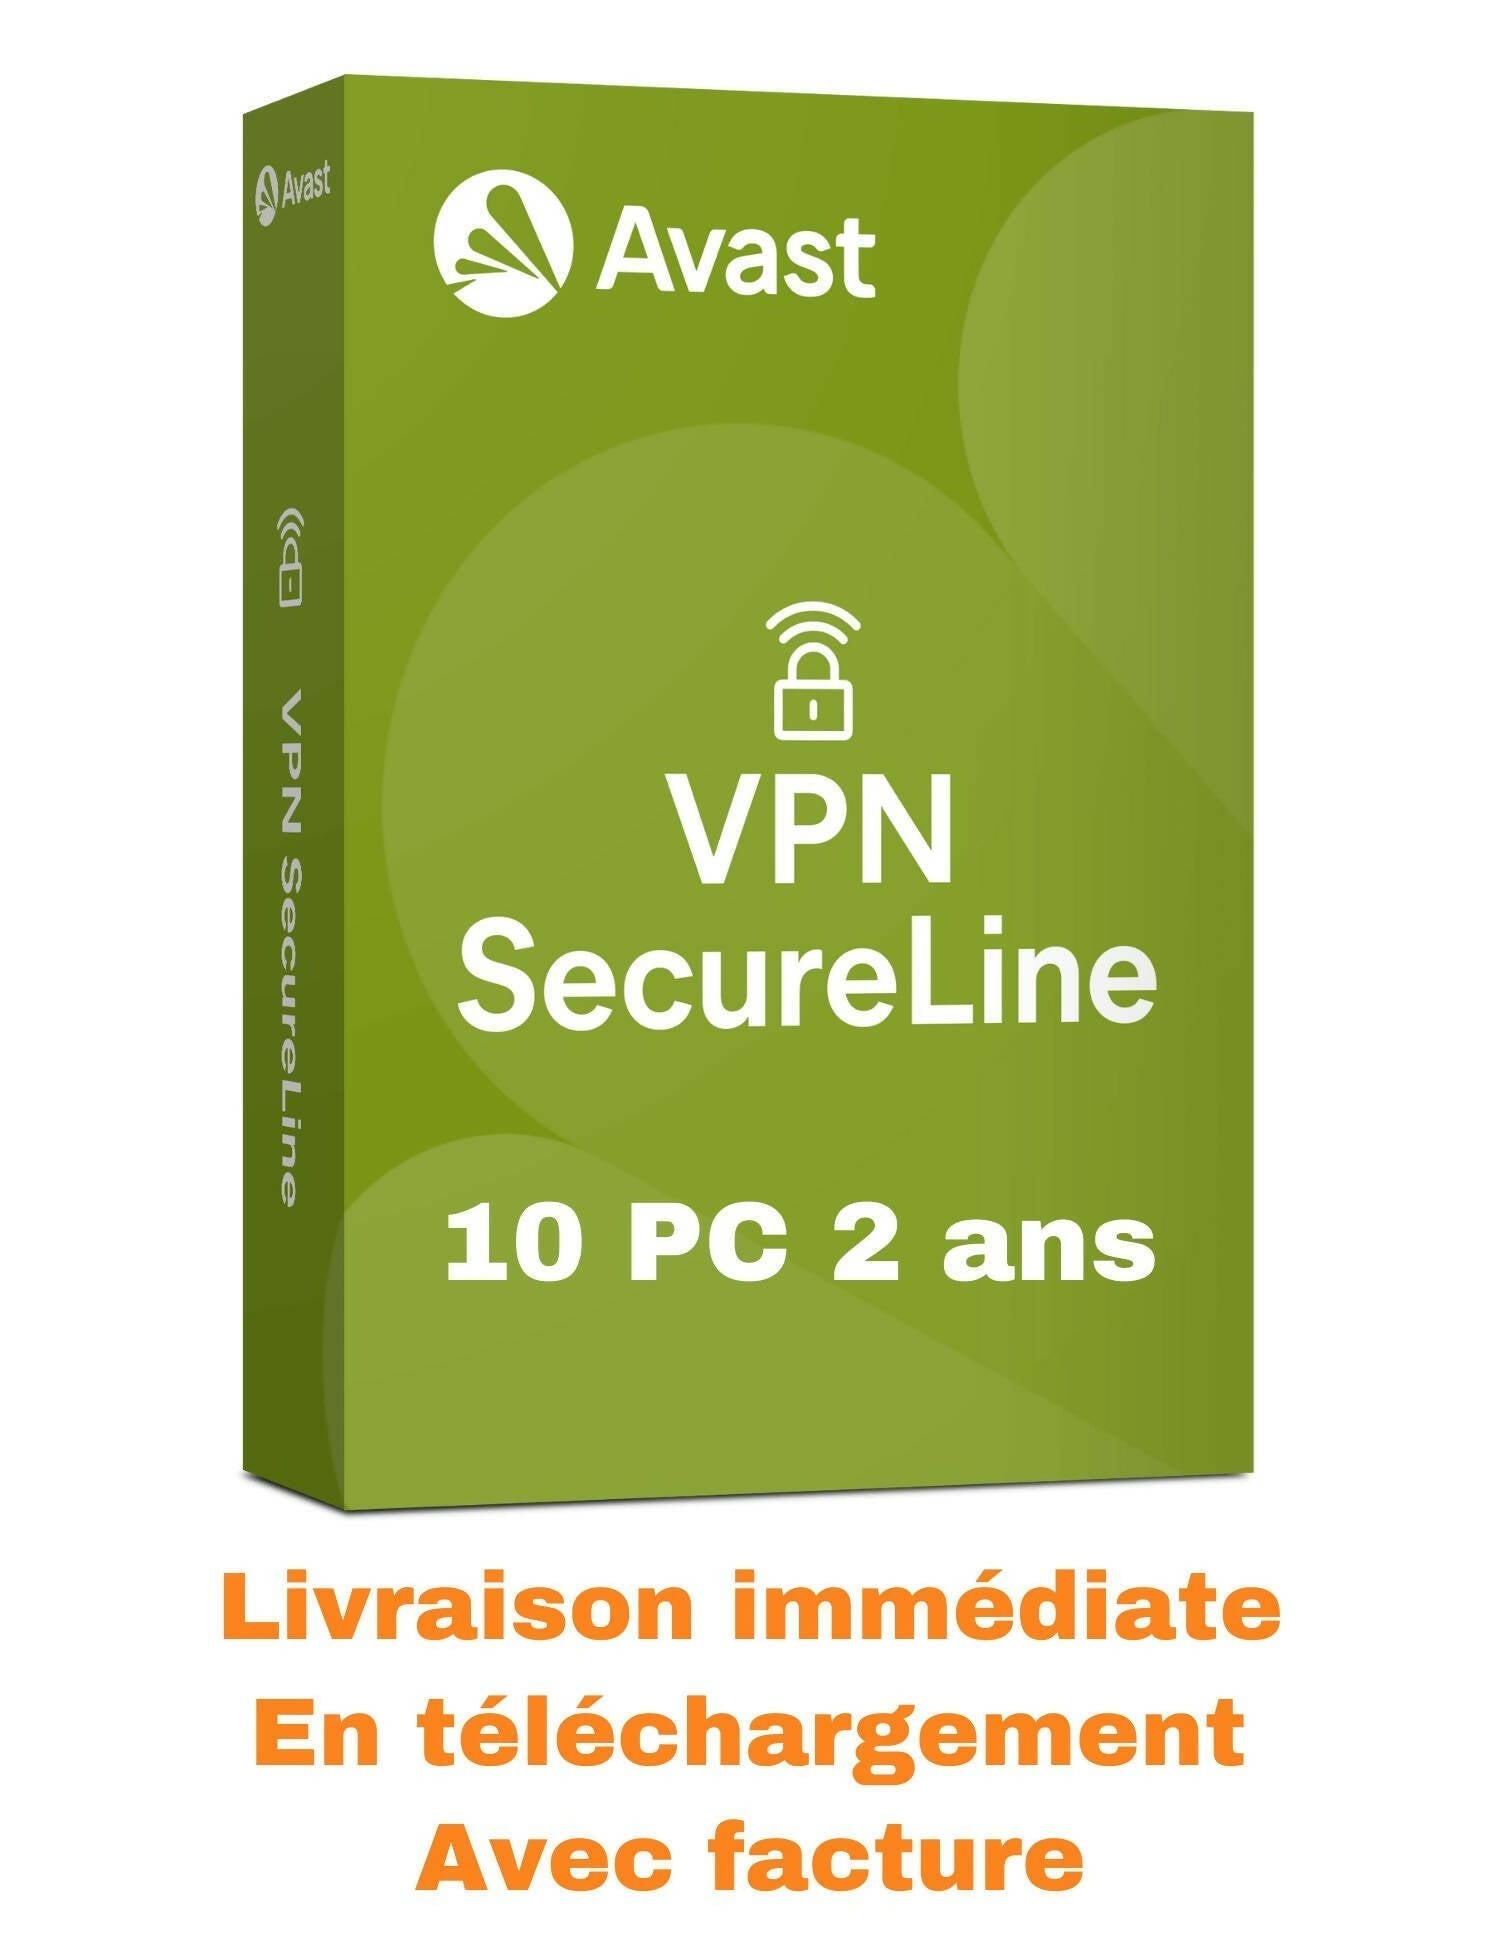 Avast Secureline VPN 10 appareils 2 ans clicktofournisseur.com